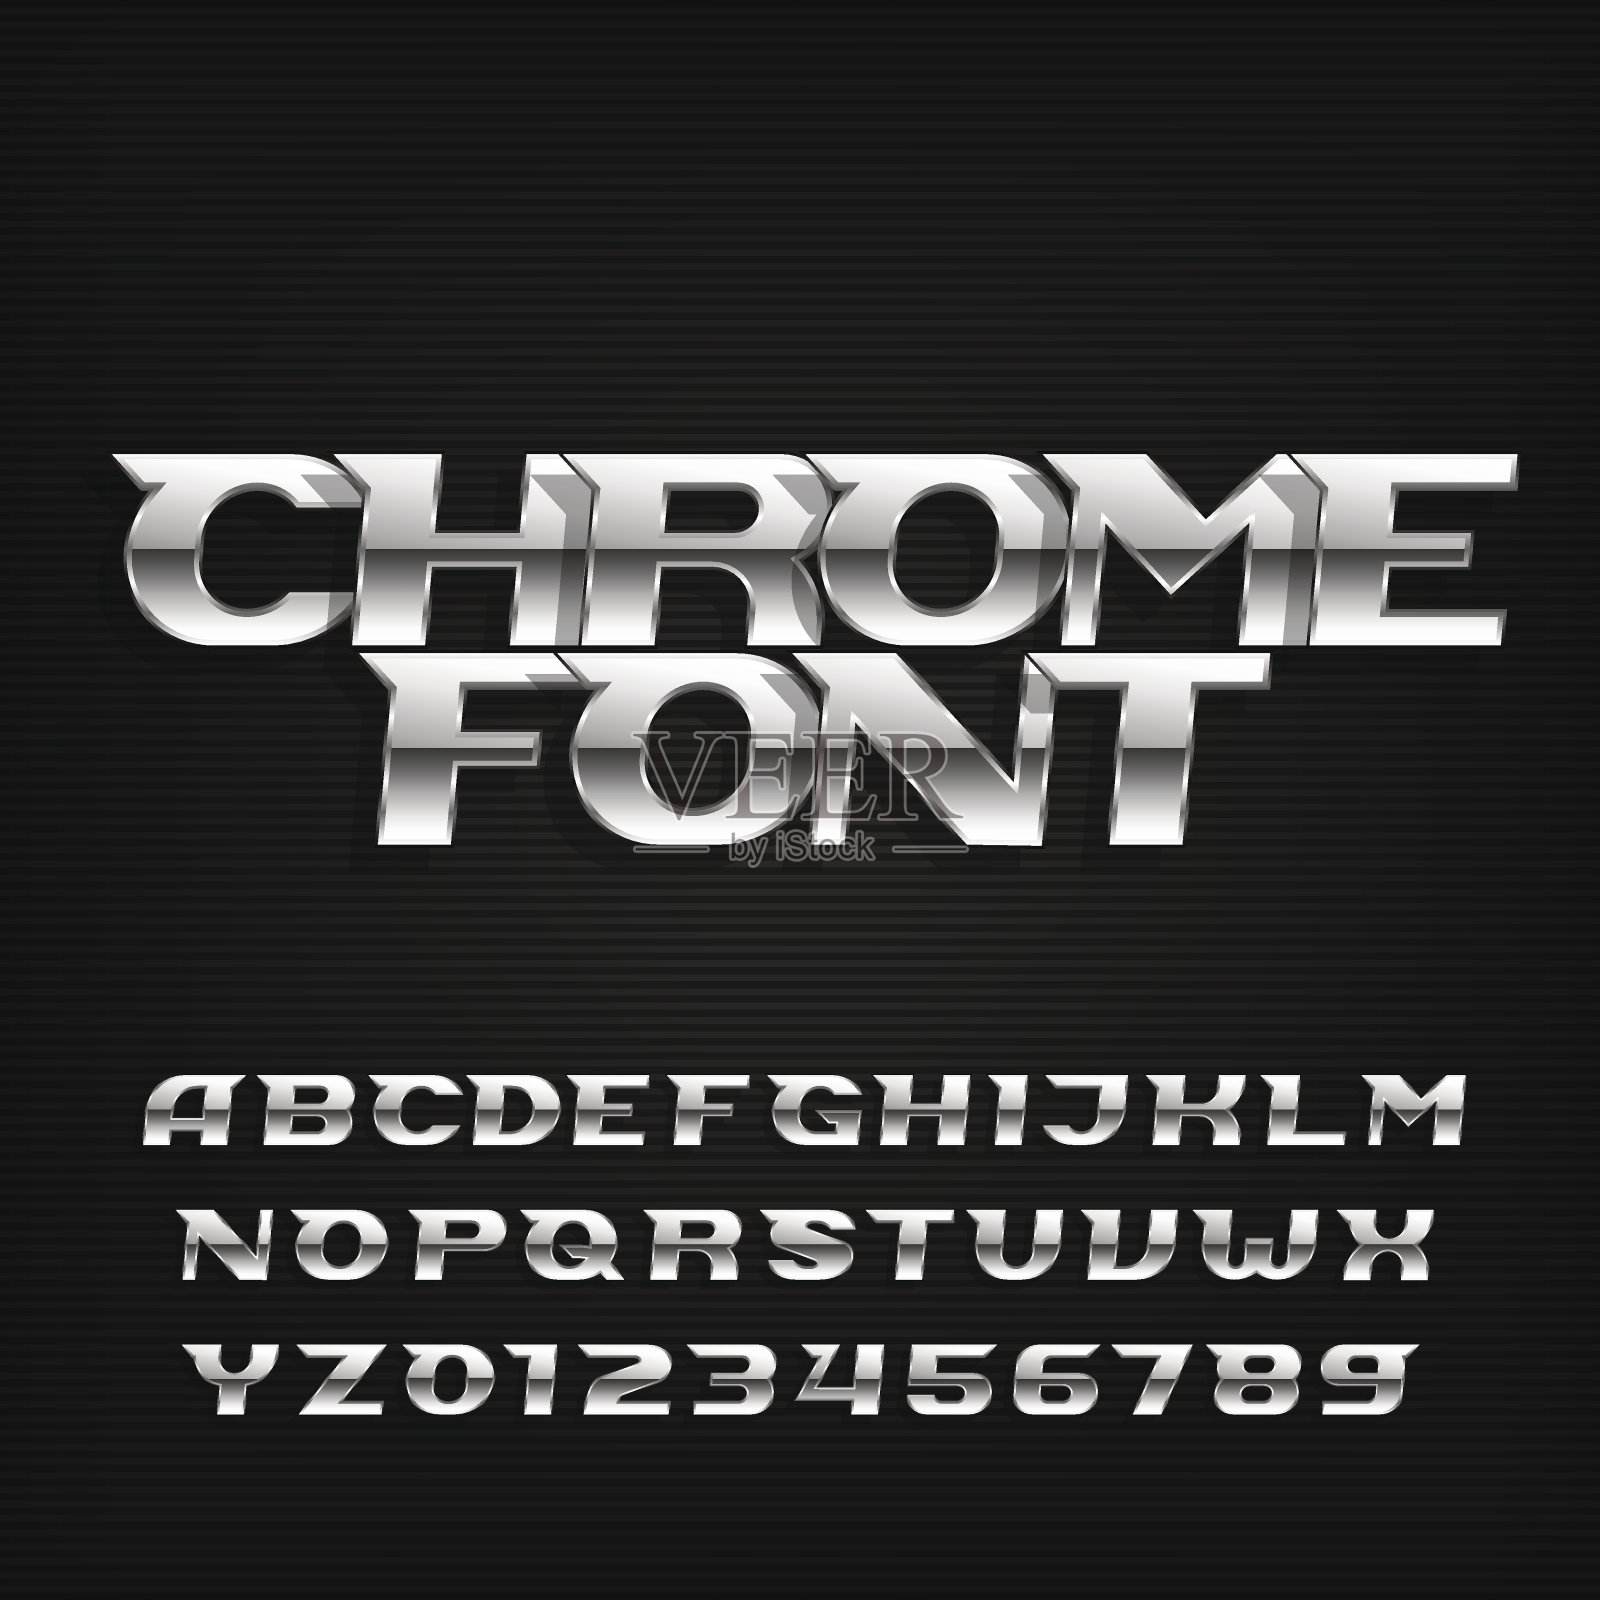 Chrome字母字体。金属效果斜体字母。设计元素图片